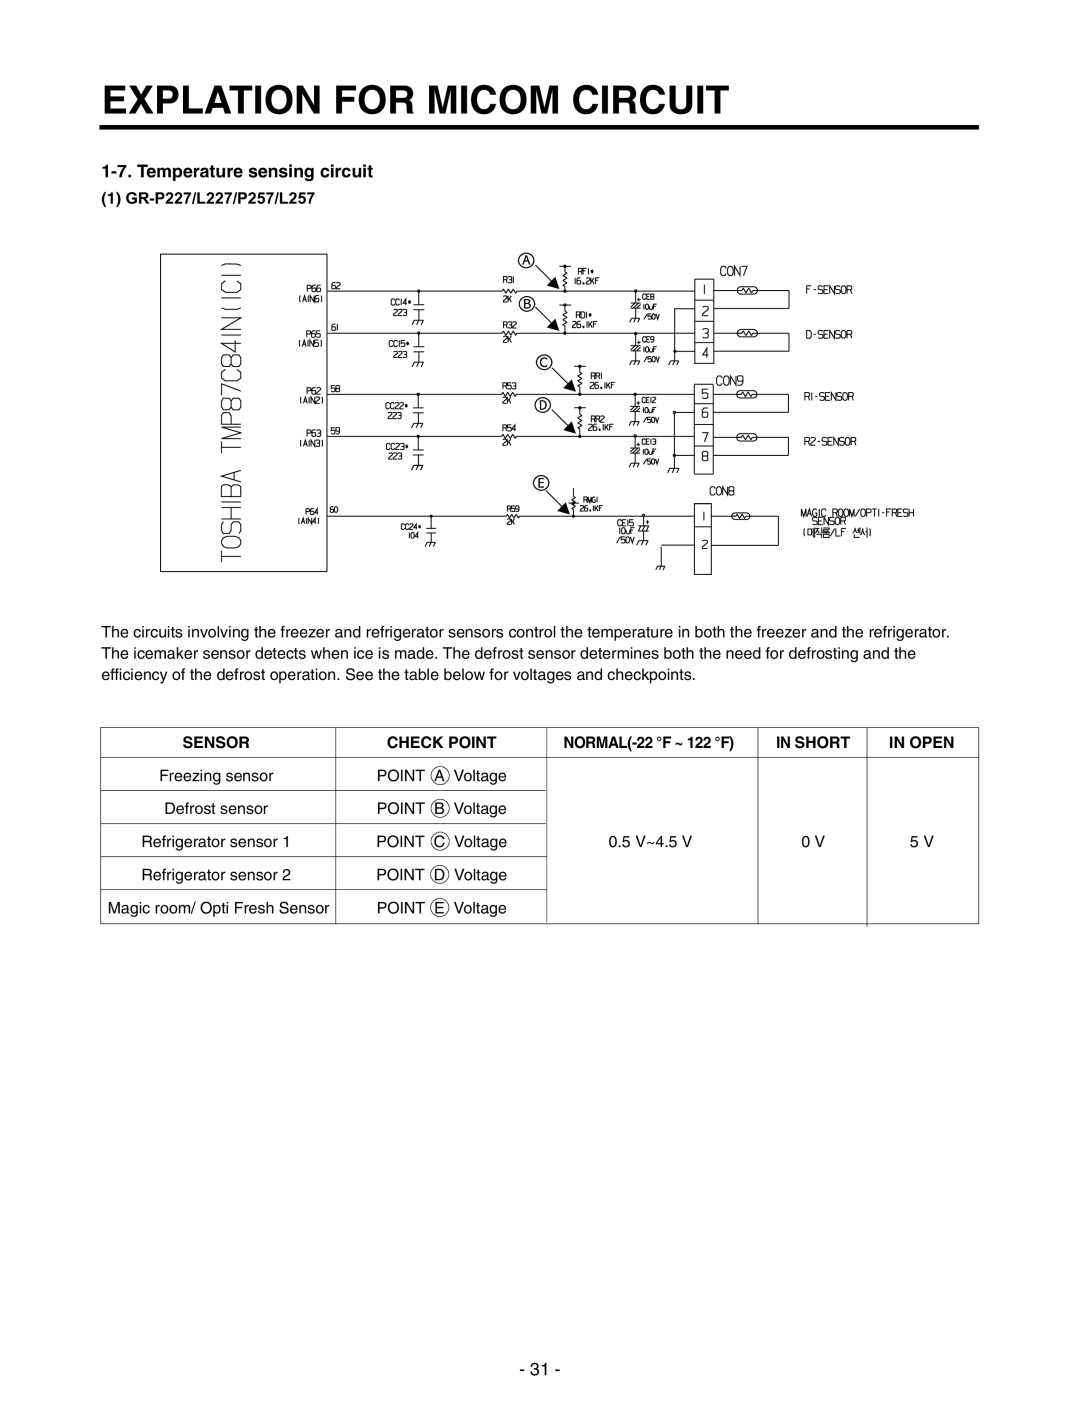 LG Electronics GR-P257/L257 Temperature sensing circuit, Explation For Micom Circuit, GR-P227/L227/P257/L257, Sensor 